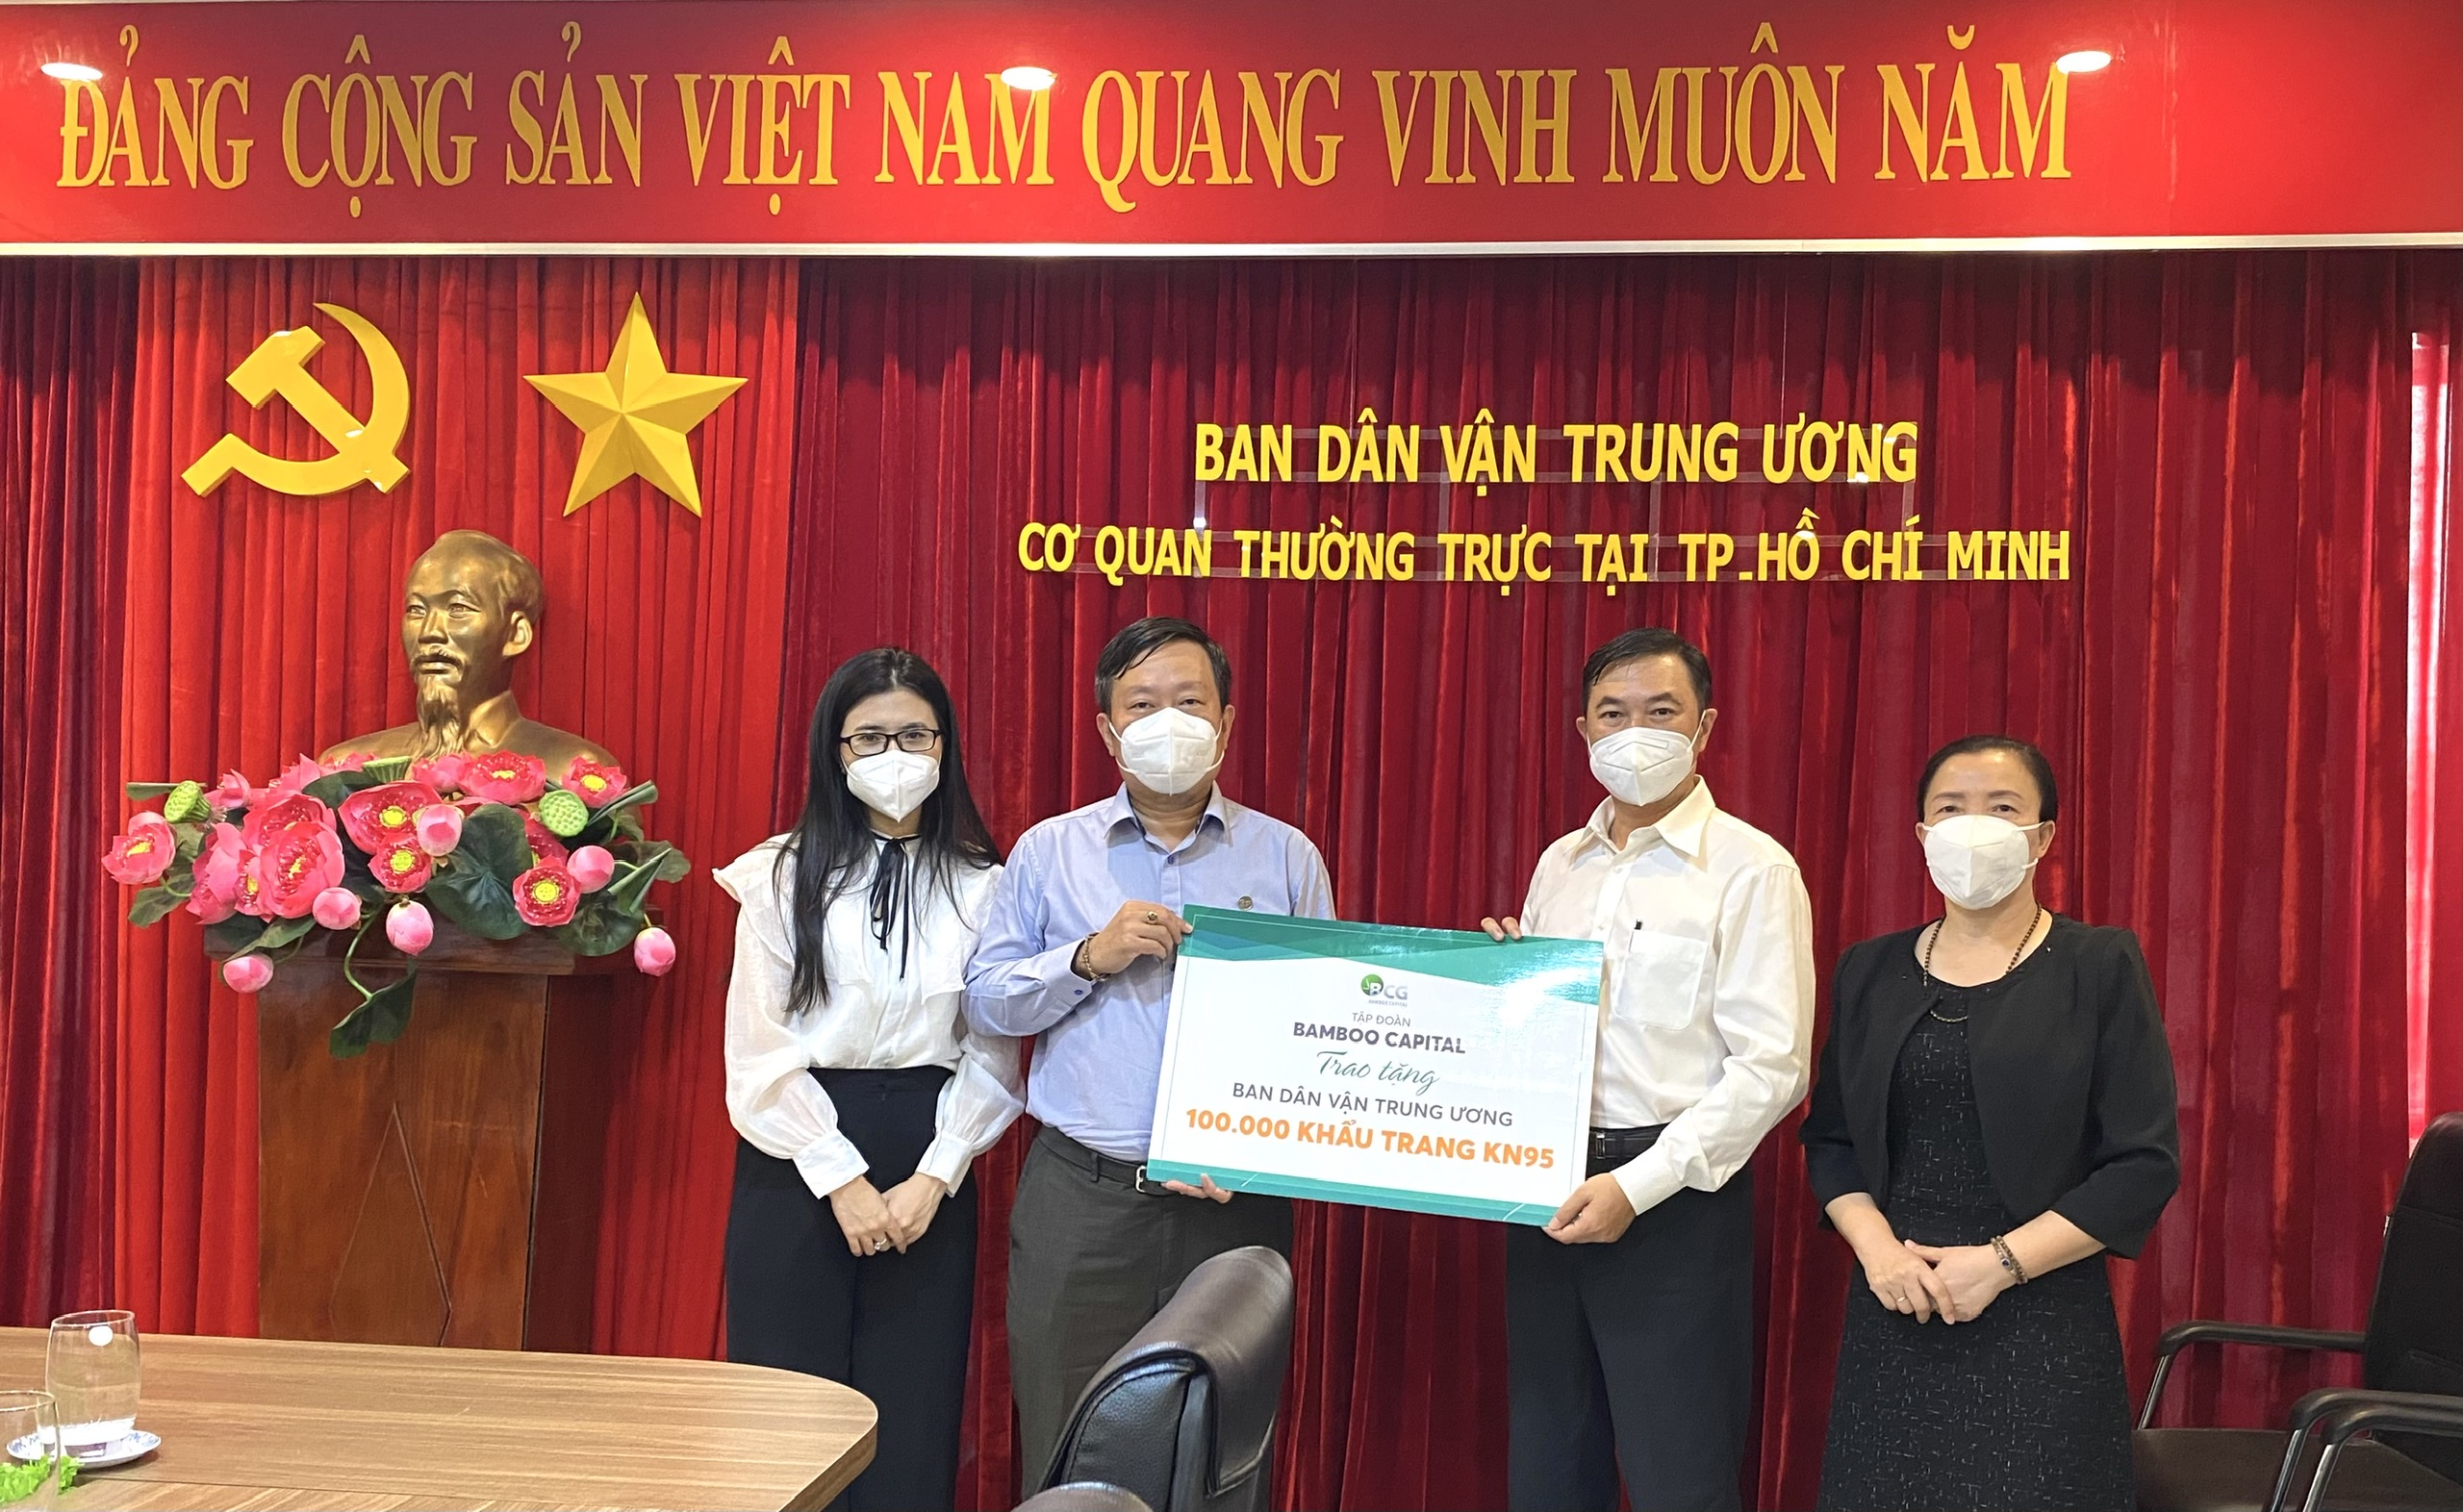 Bamboo Capital Group donated 100,000 N95 face masks